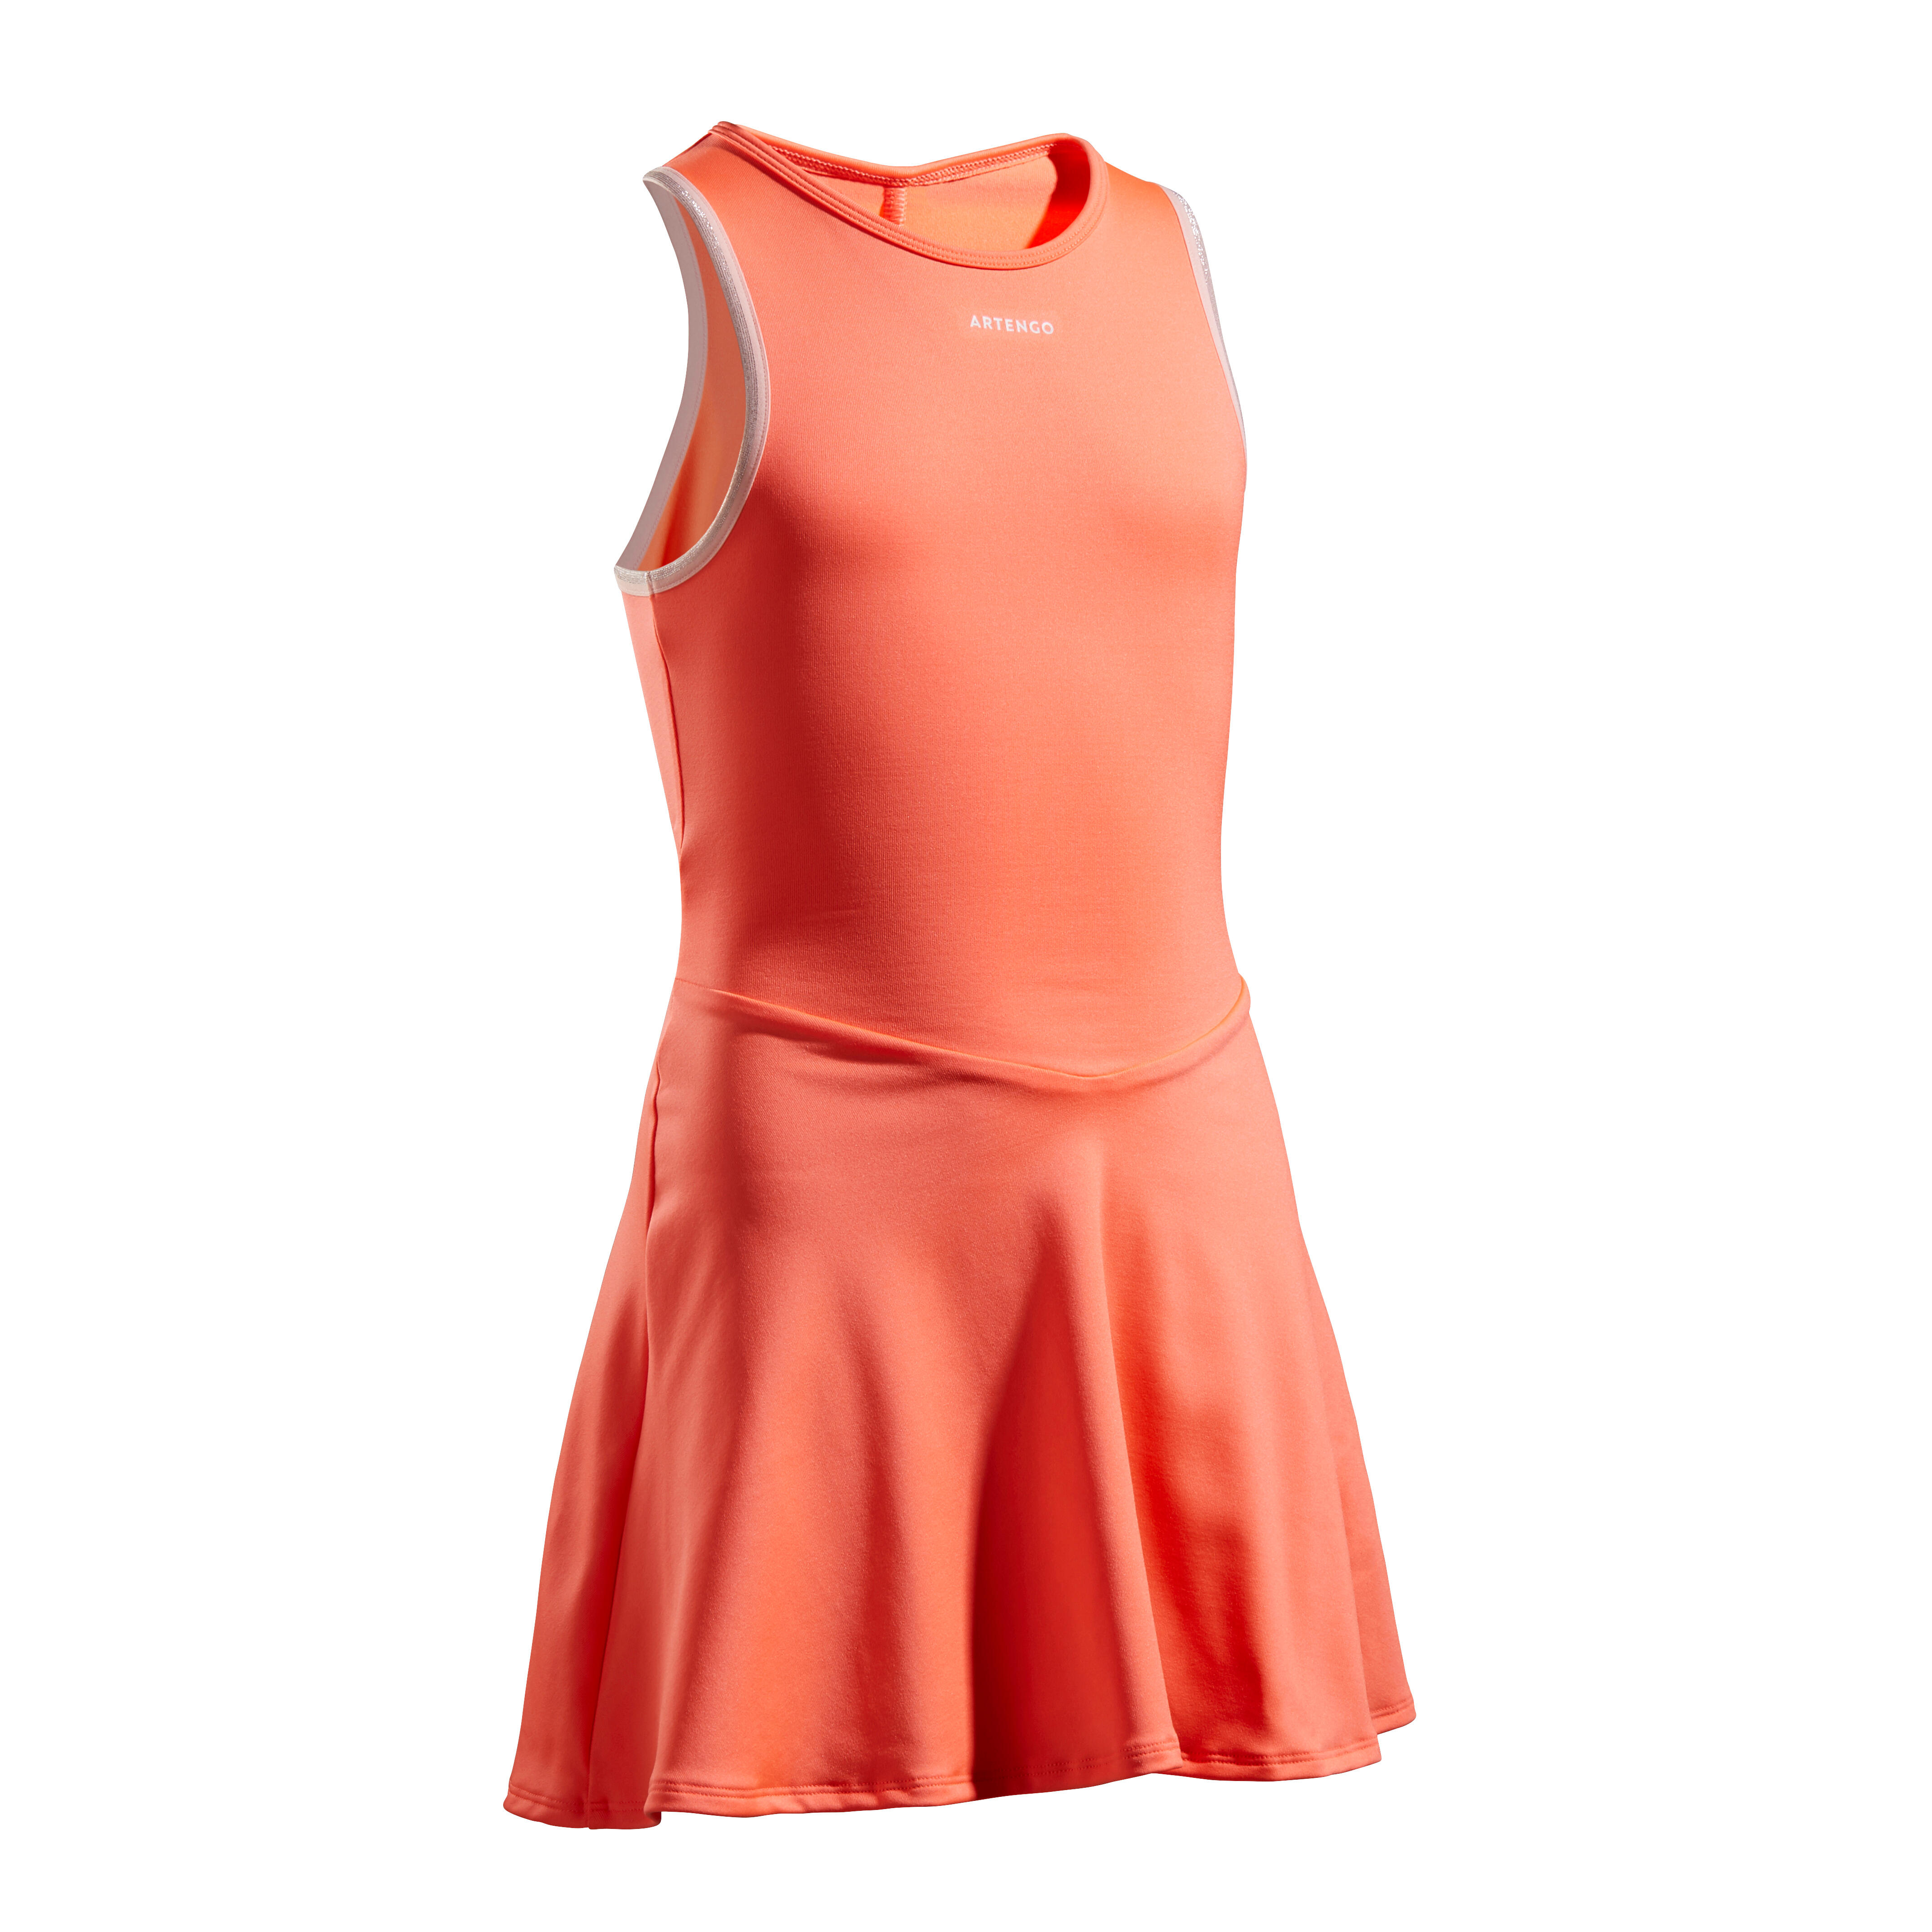 decathlon tennis dress